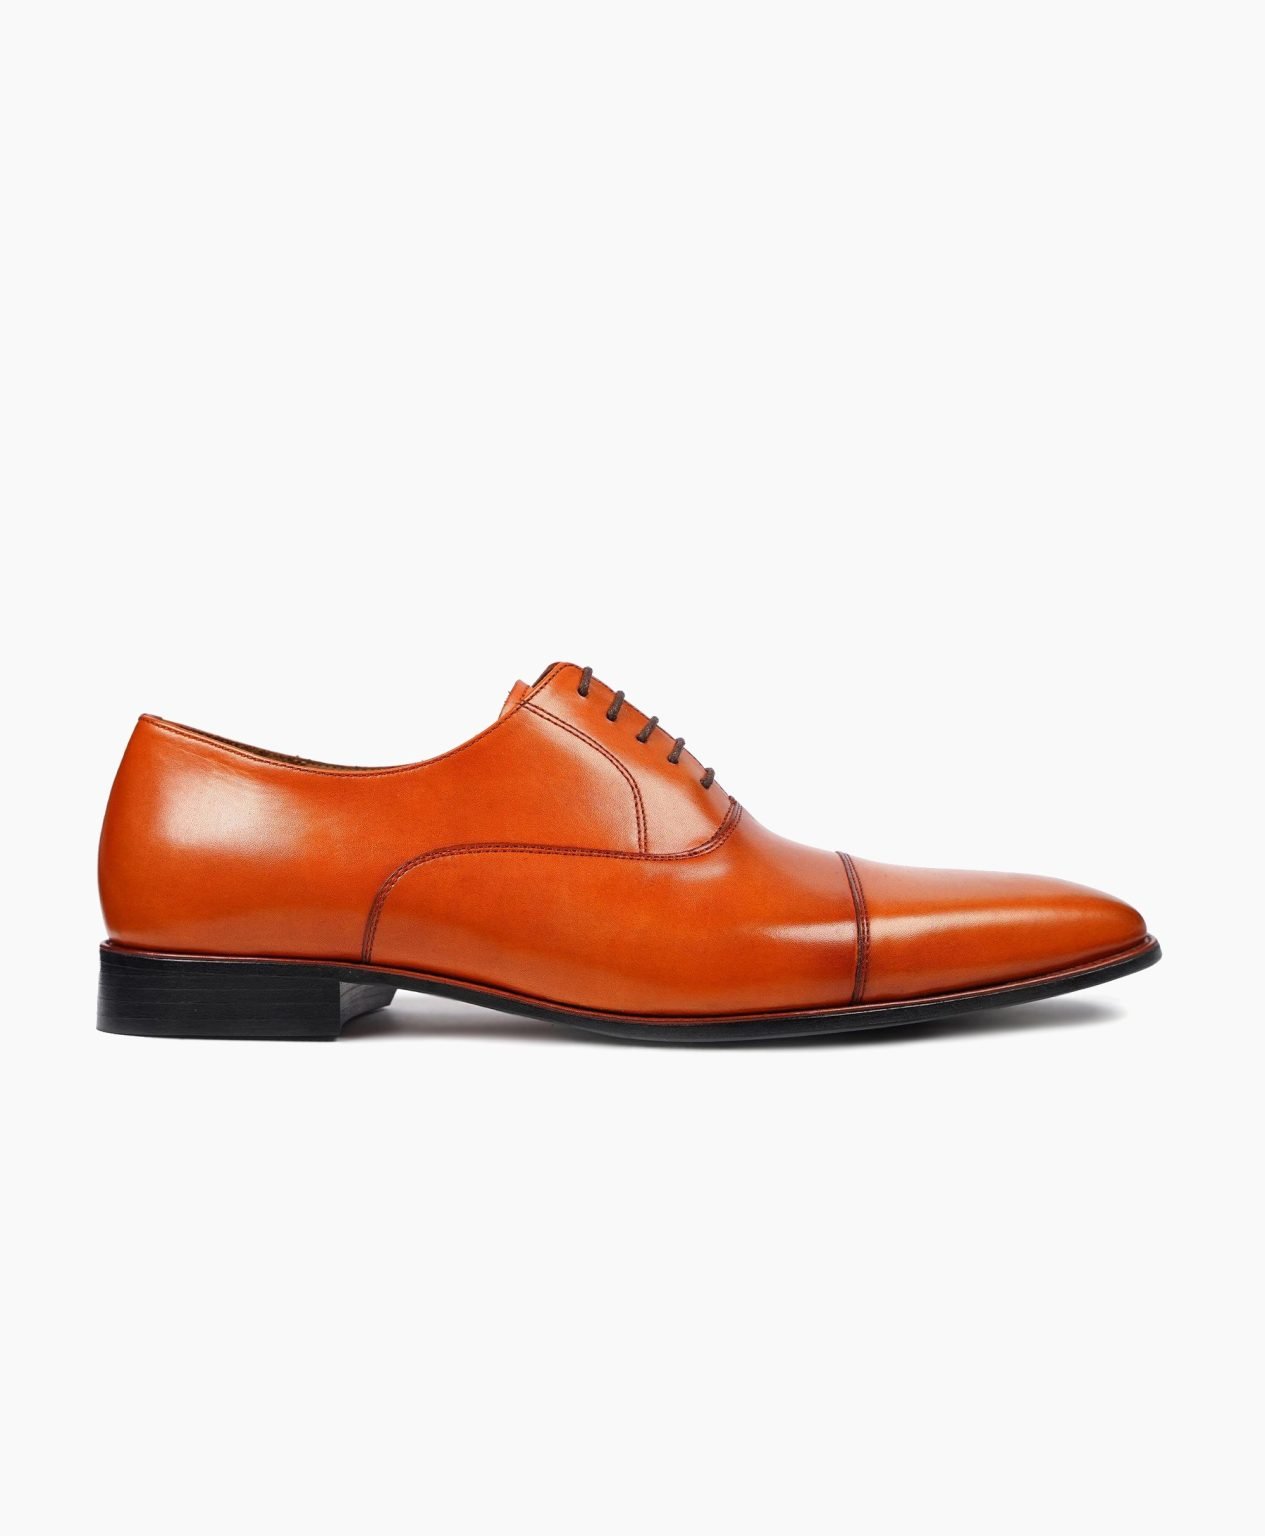 helston-oxford-orange-tan-leather-shoes-image201